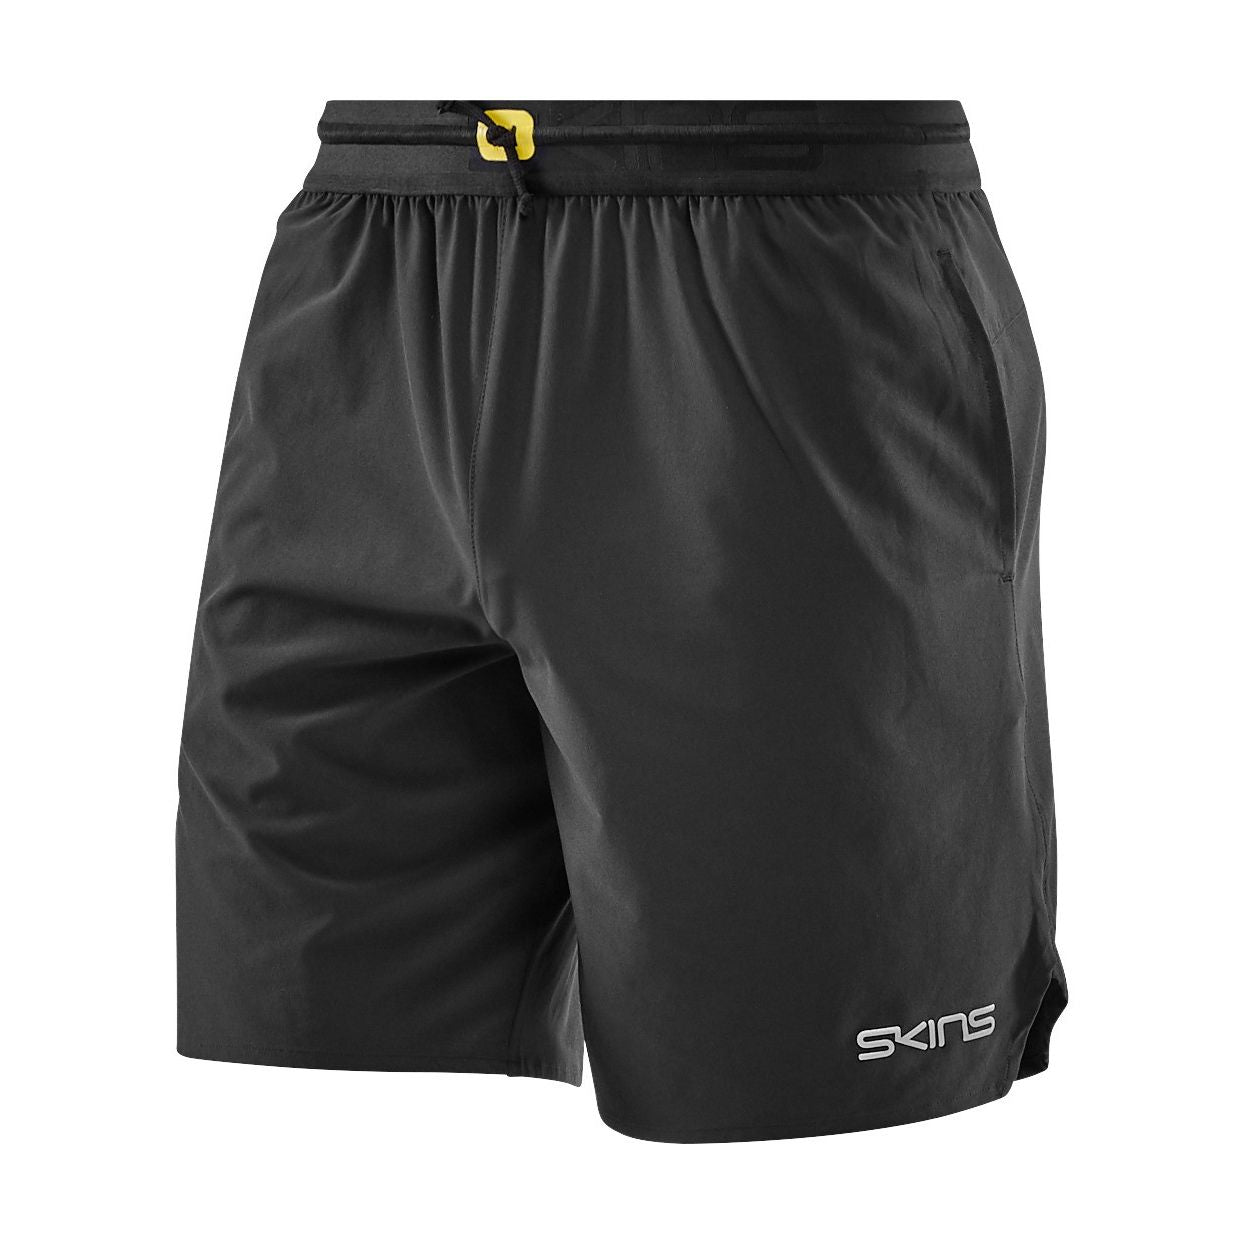 SKINS Men's Series-3 Active X-Fit Shorts - Black